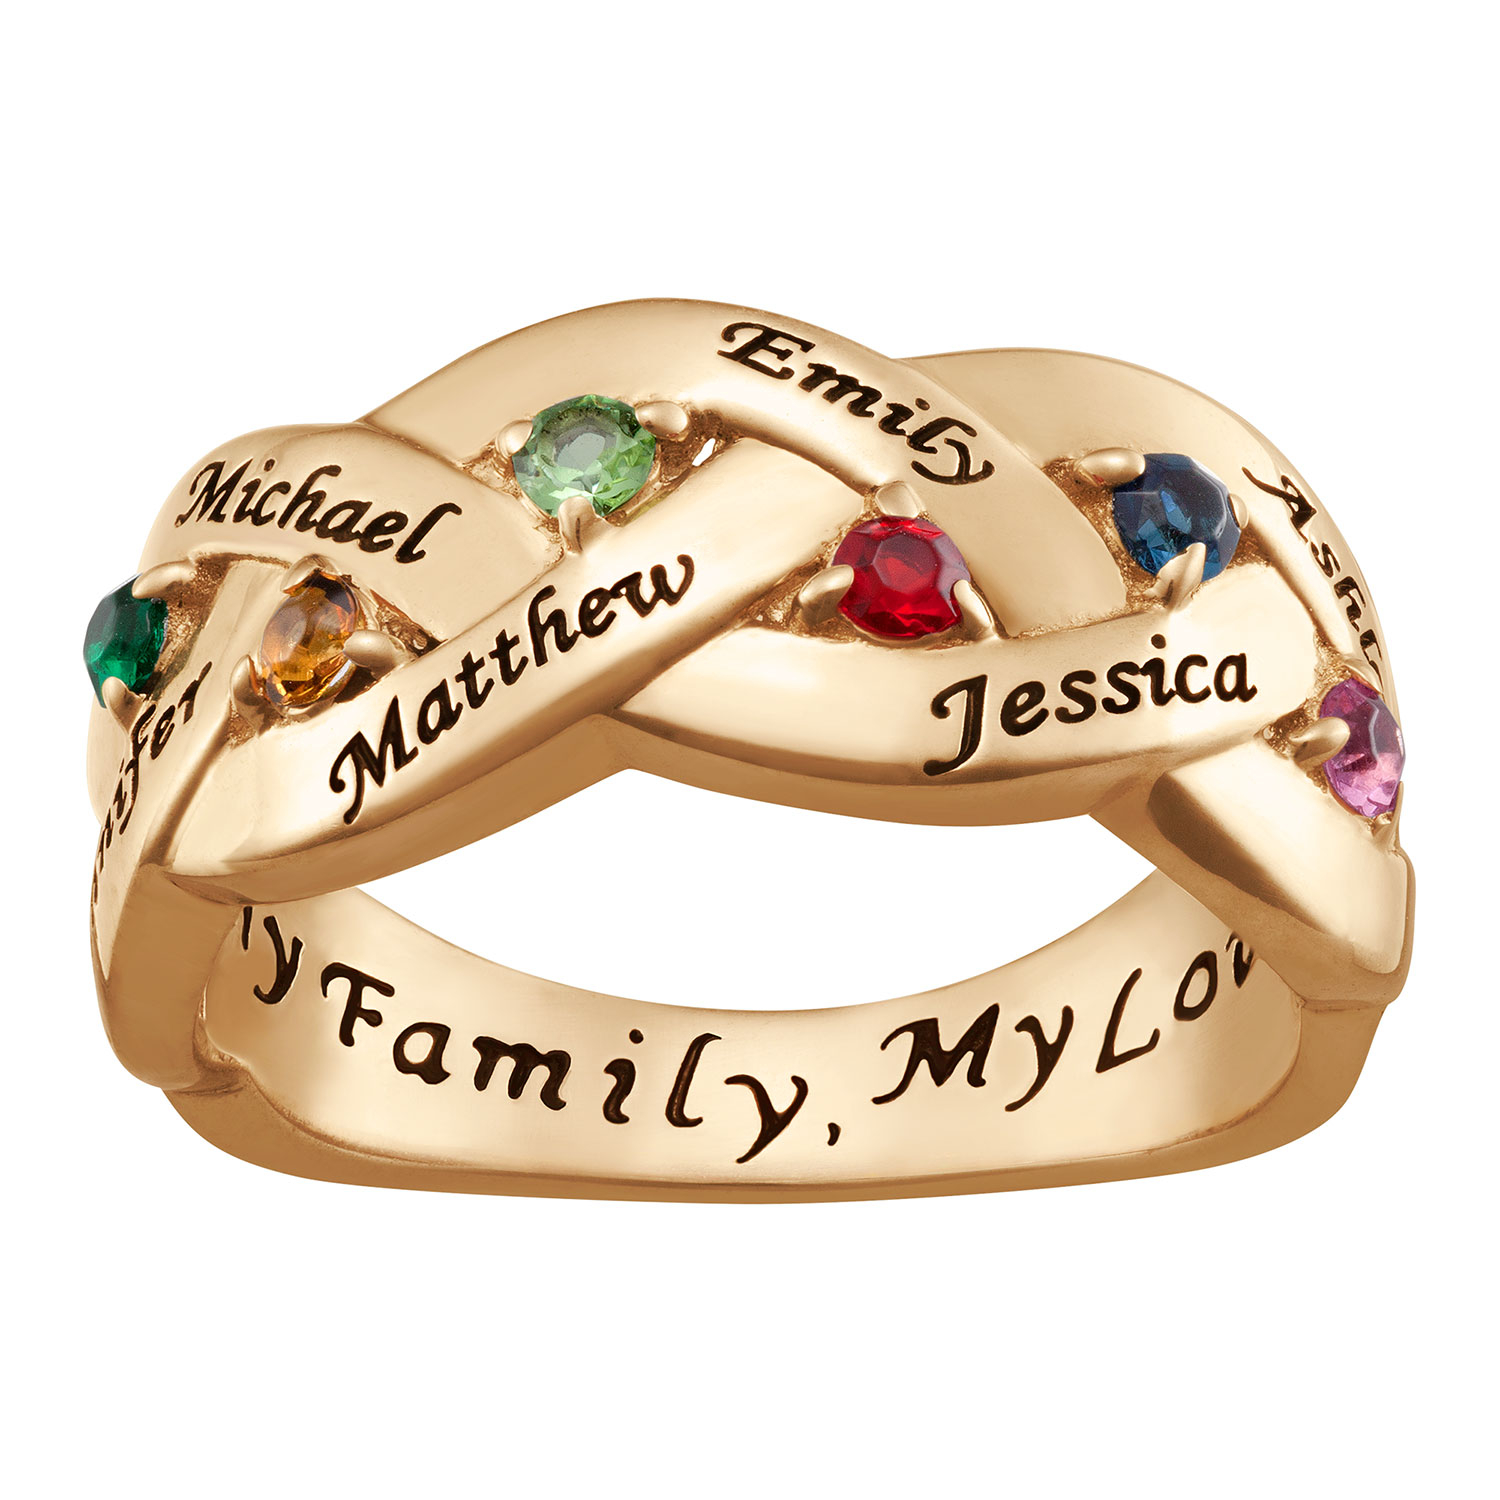 14K Gold over Sterling Family Name & Birthstone Ring